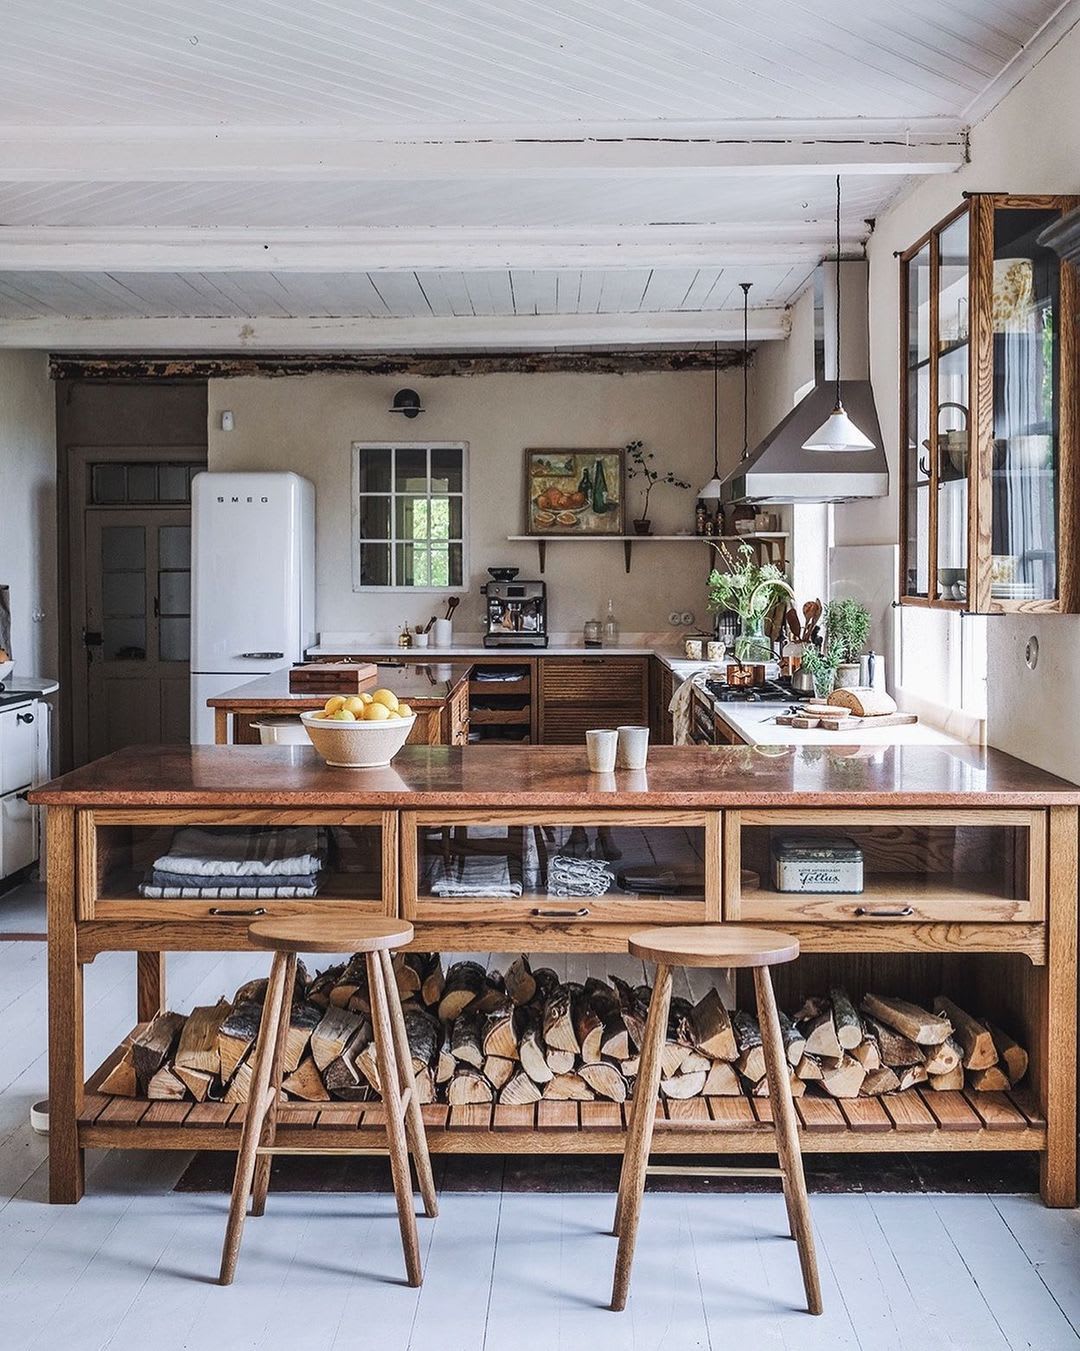 Laura Muthesius & Nora Eisermann on Instagram: "A favorite photo from our swedish kitchen - already miss this place✨ #designtales_swedenhome ____ #kitcheninspo… | Scandi kitchen, Peninsula kitchen design, Devol kitchens